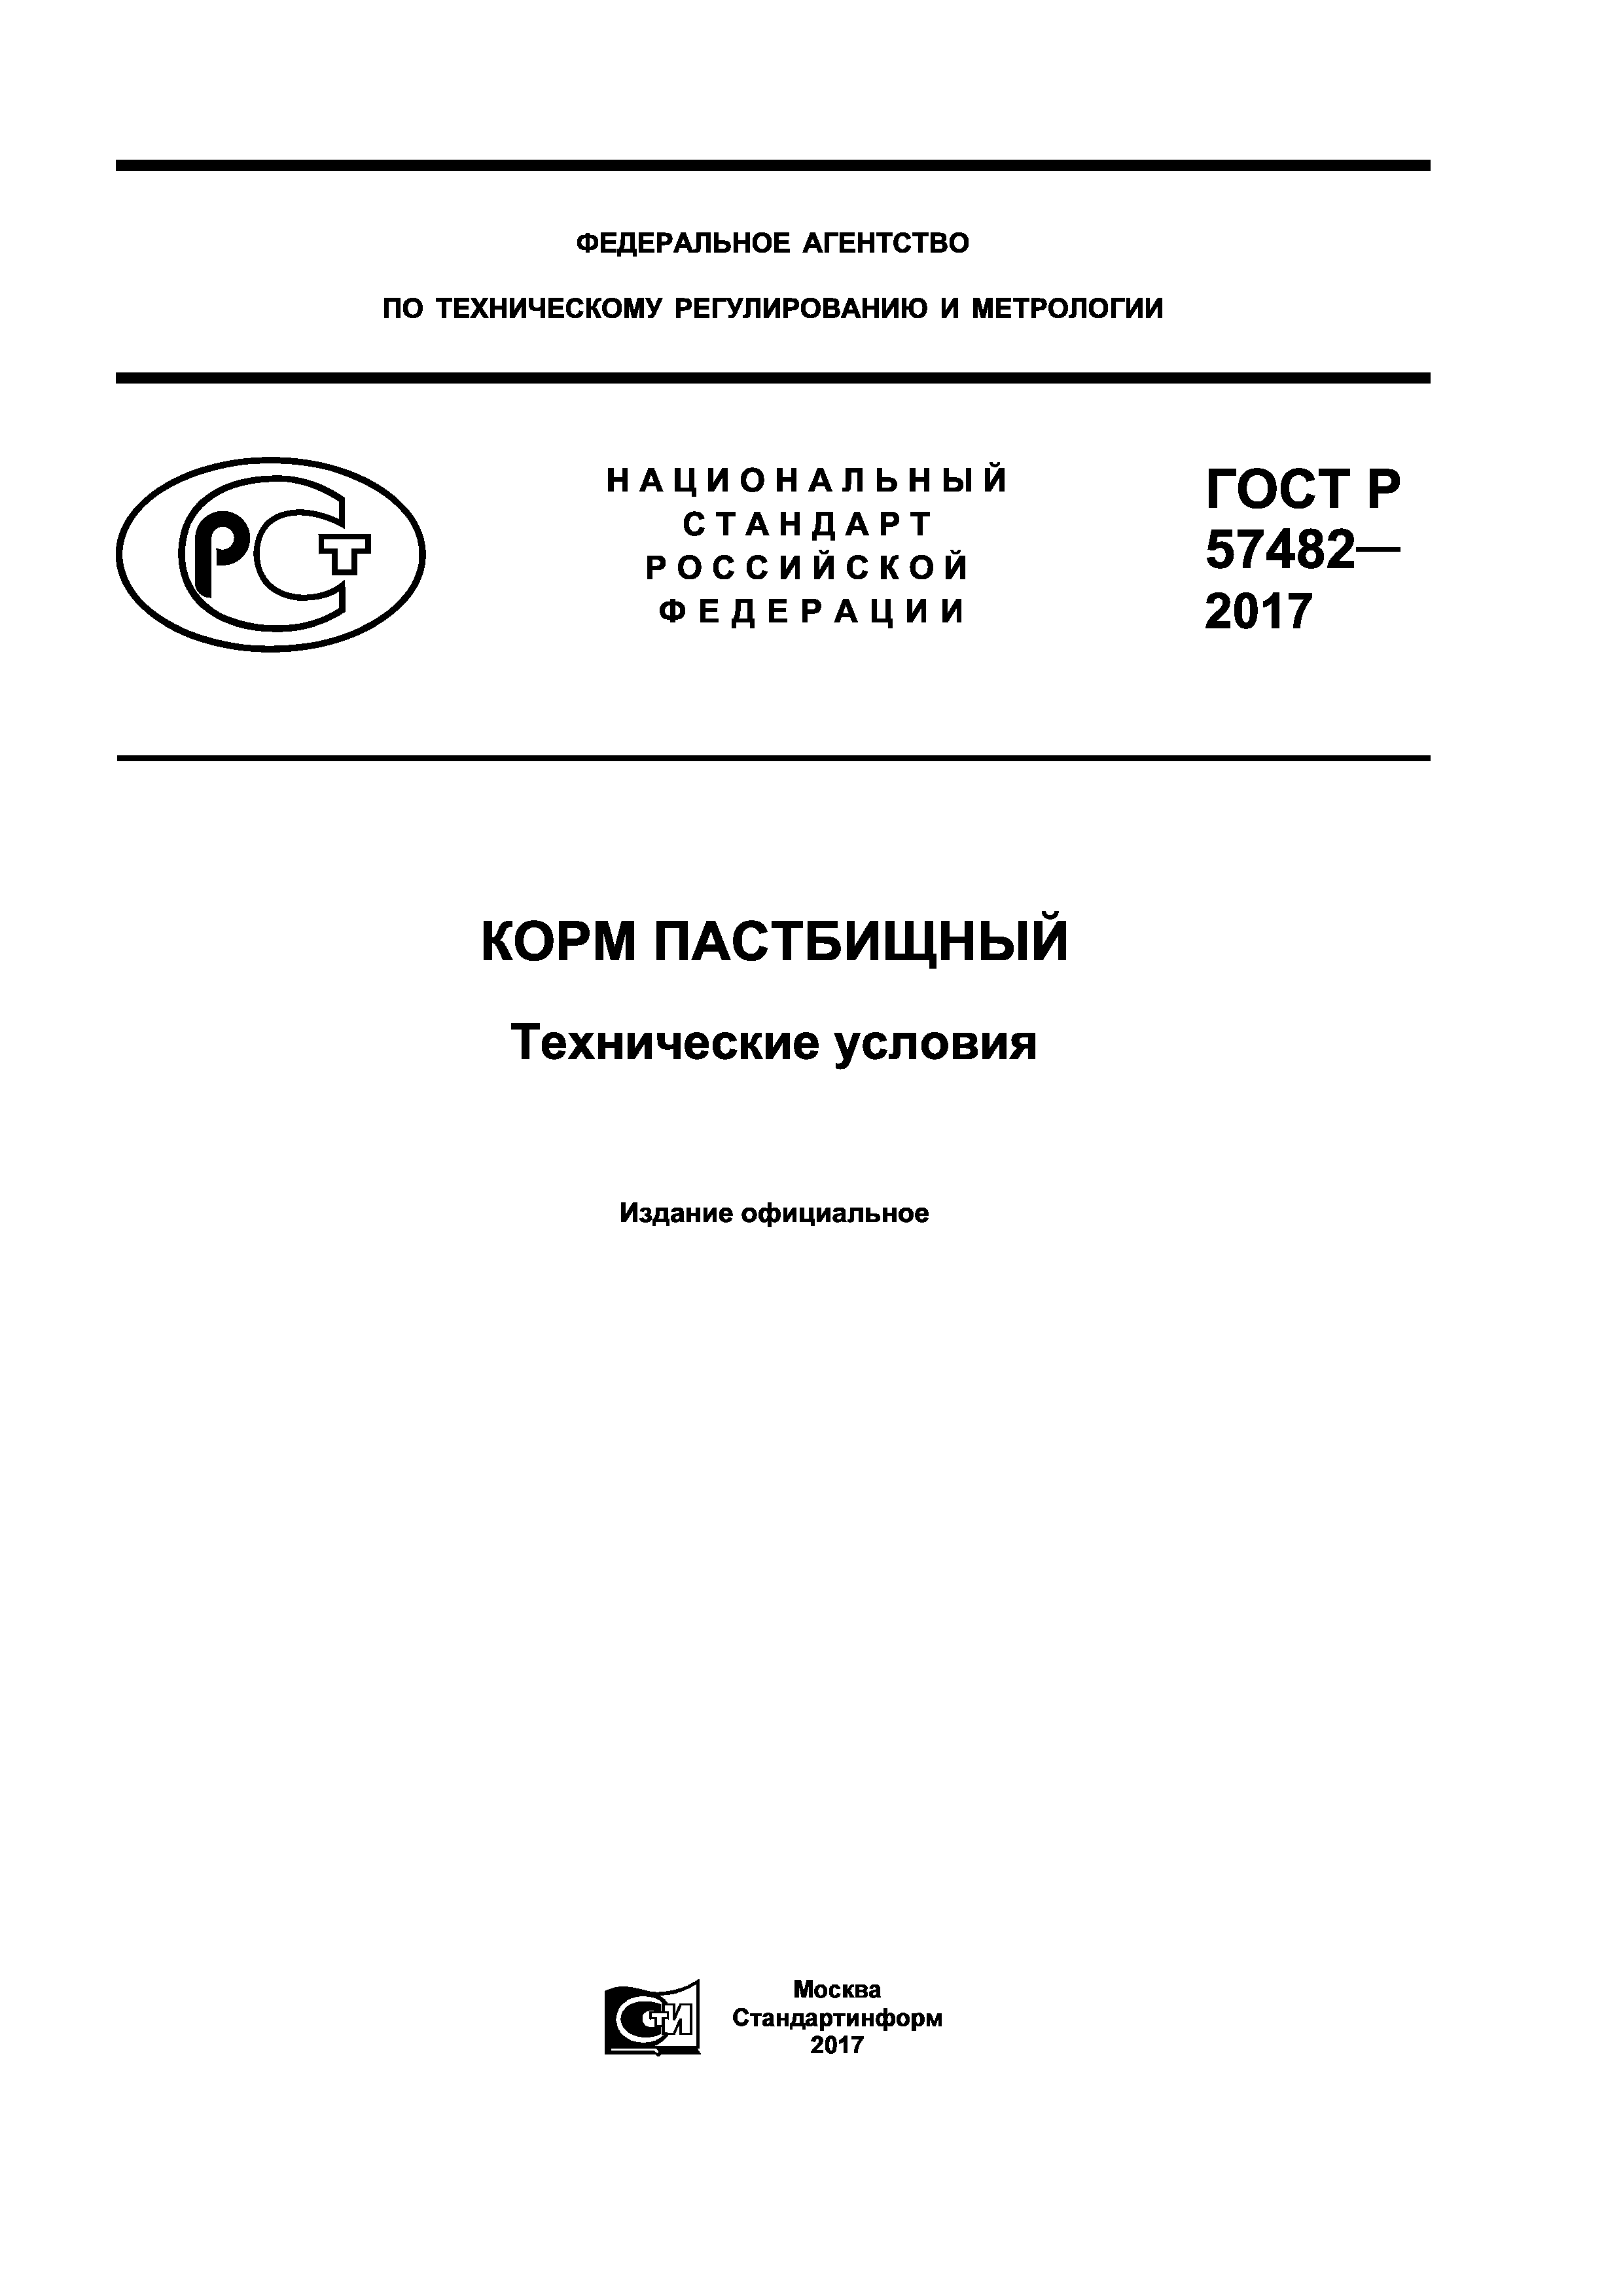 ГОСТ Р 57482-2017